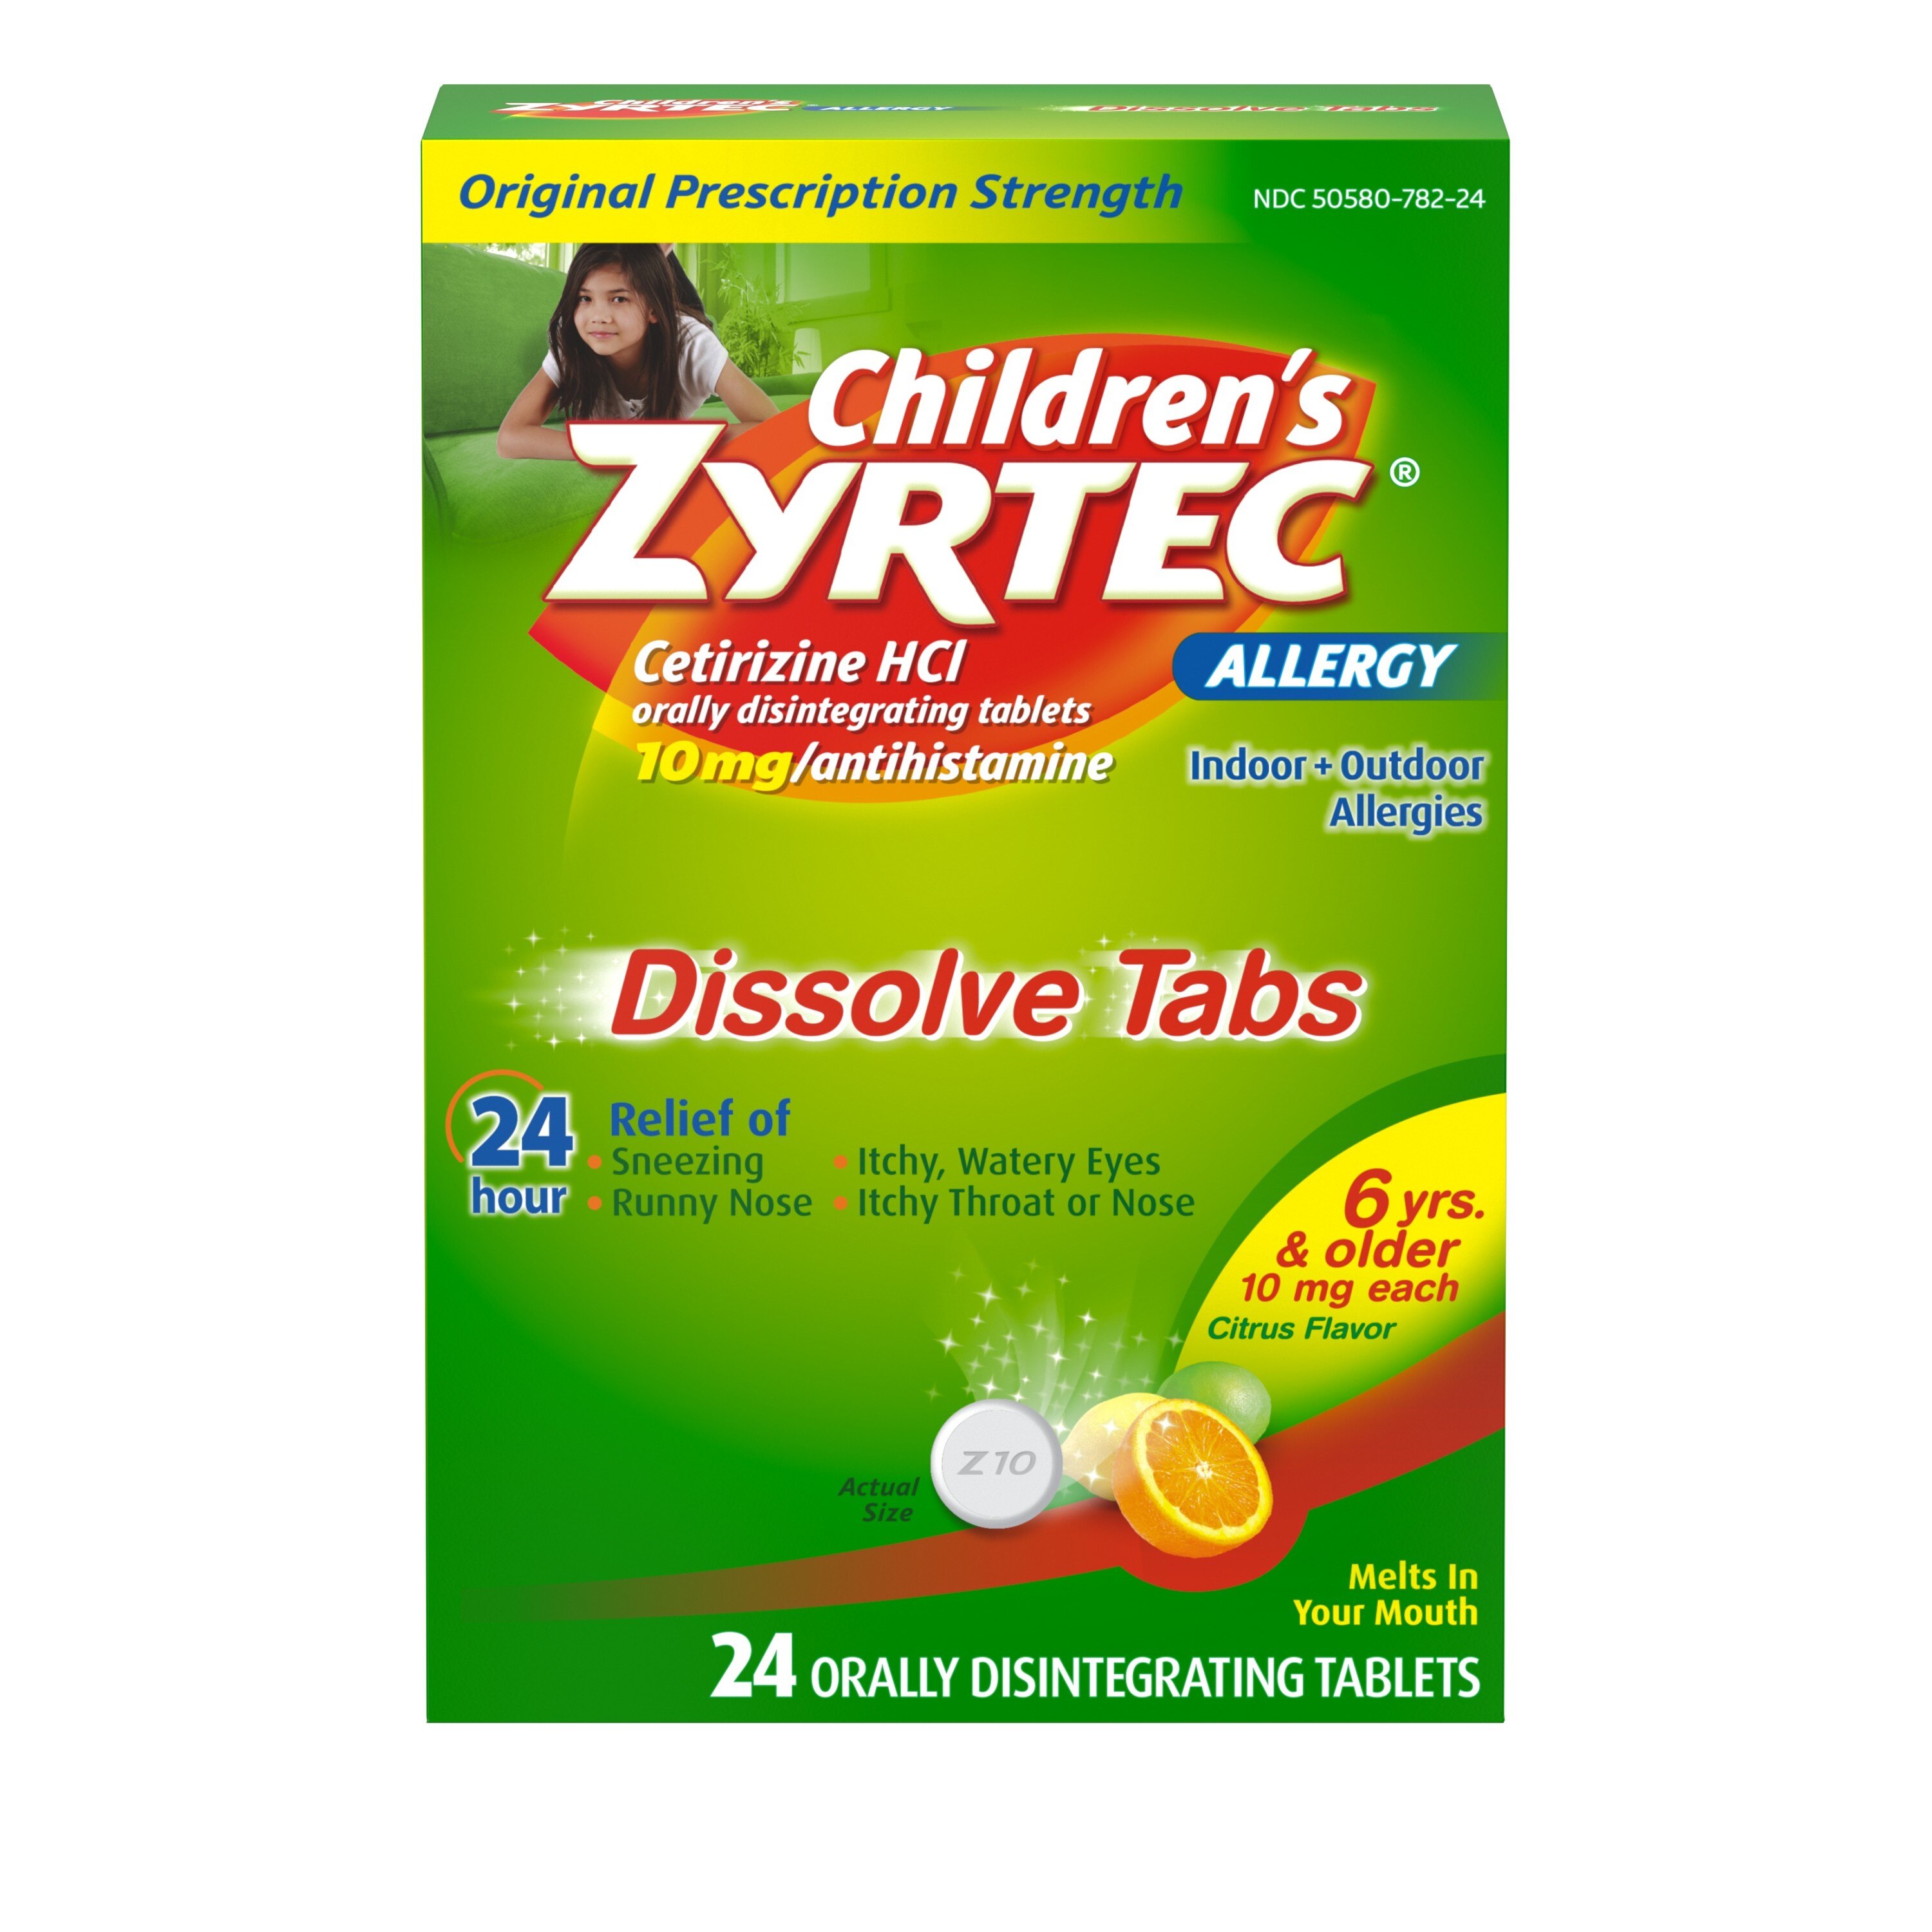 Zyrtec Children's 24HR Allergy Relief Dissovable Tabs, Citrus